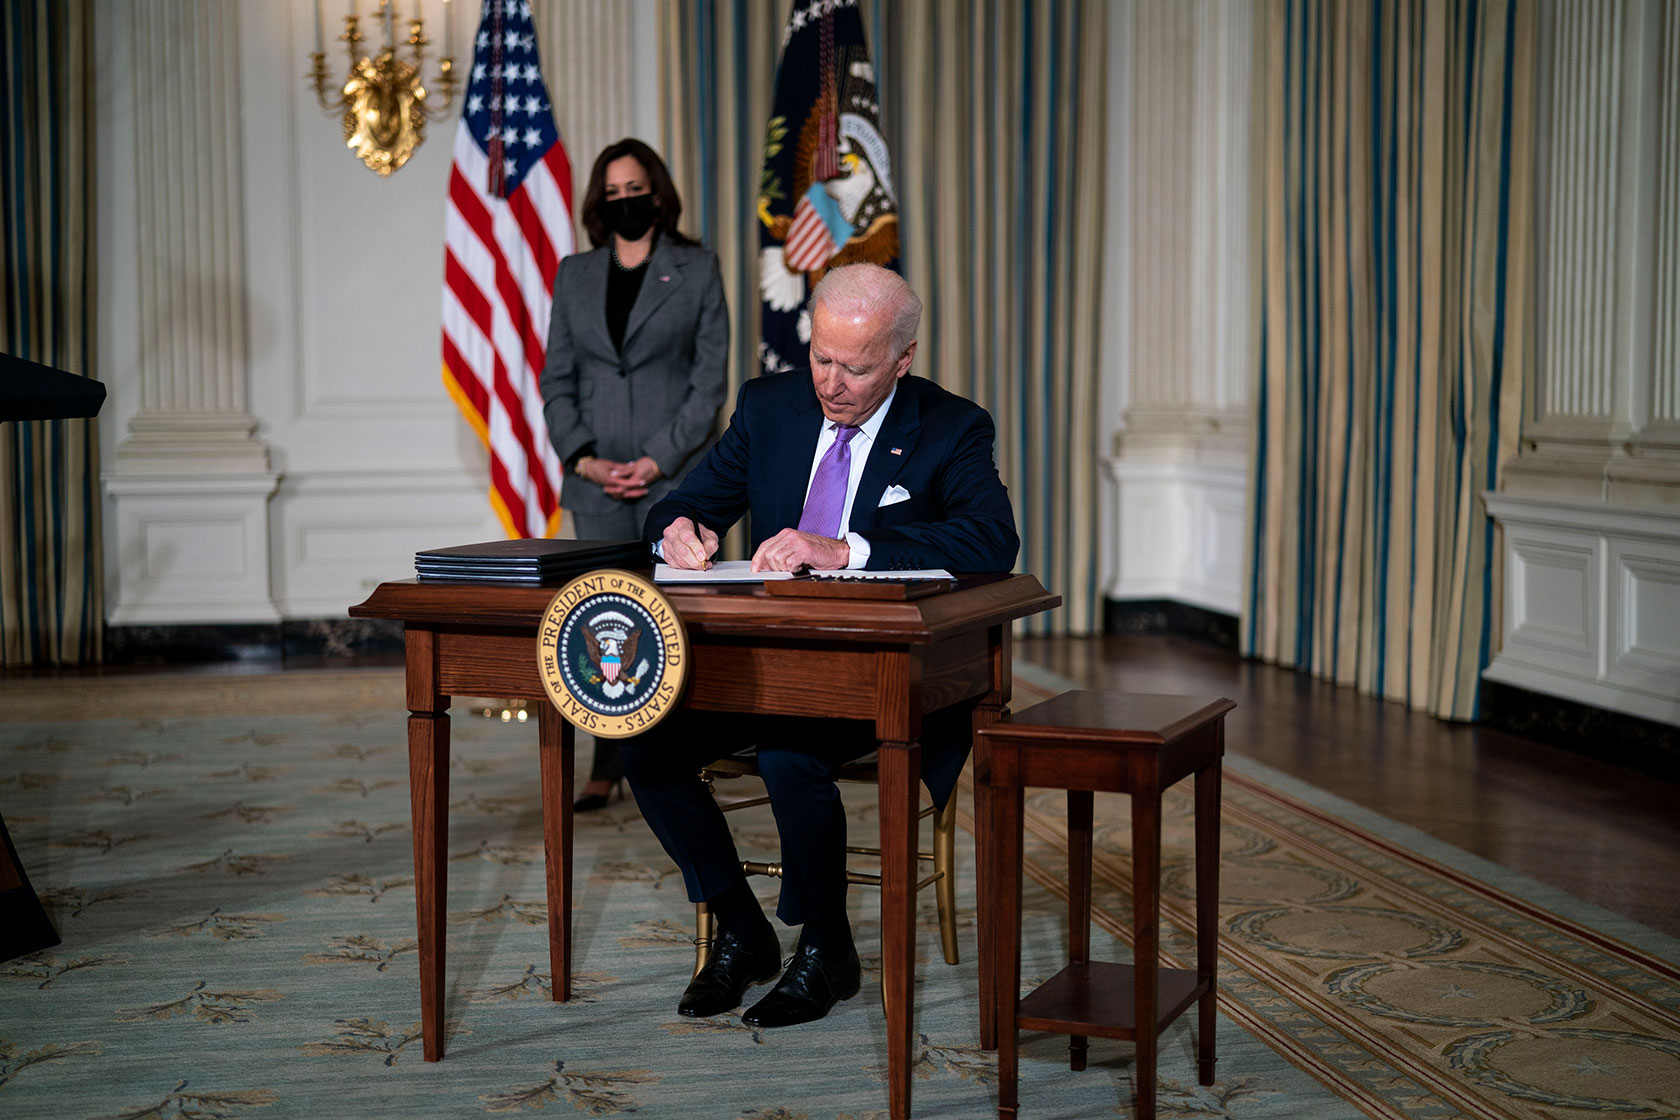 Vice President Kamala Harris looks on as U.S. President Joe Biden signs executives orders related to his racial equity agenda.